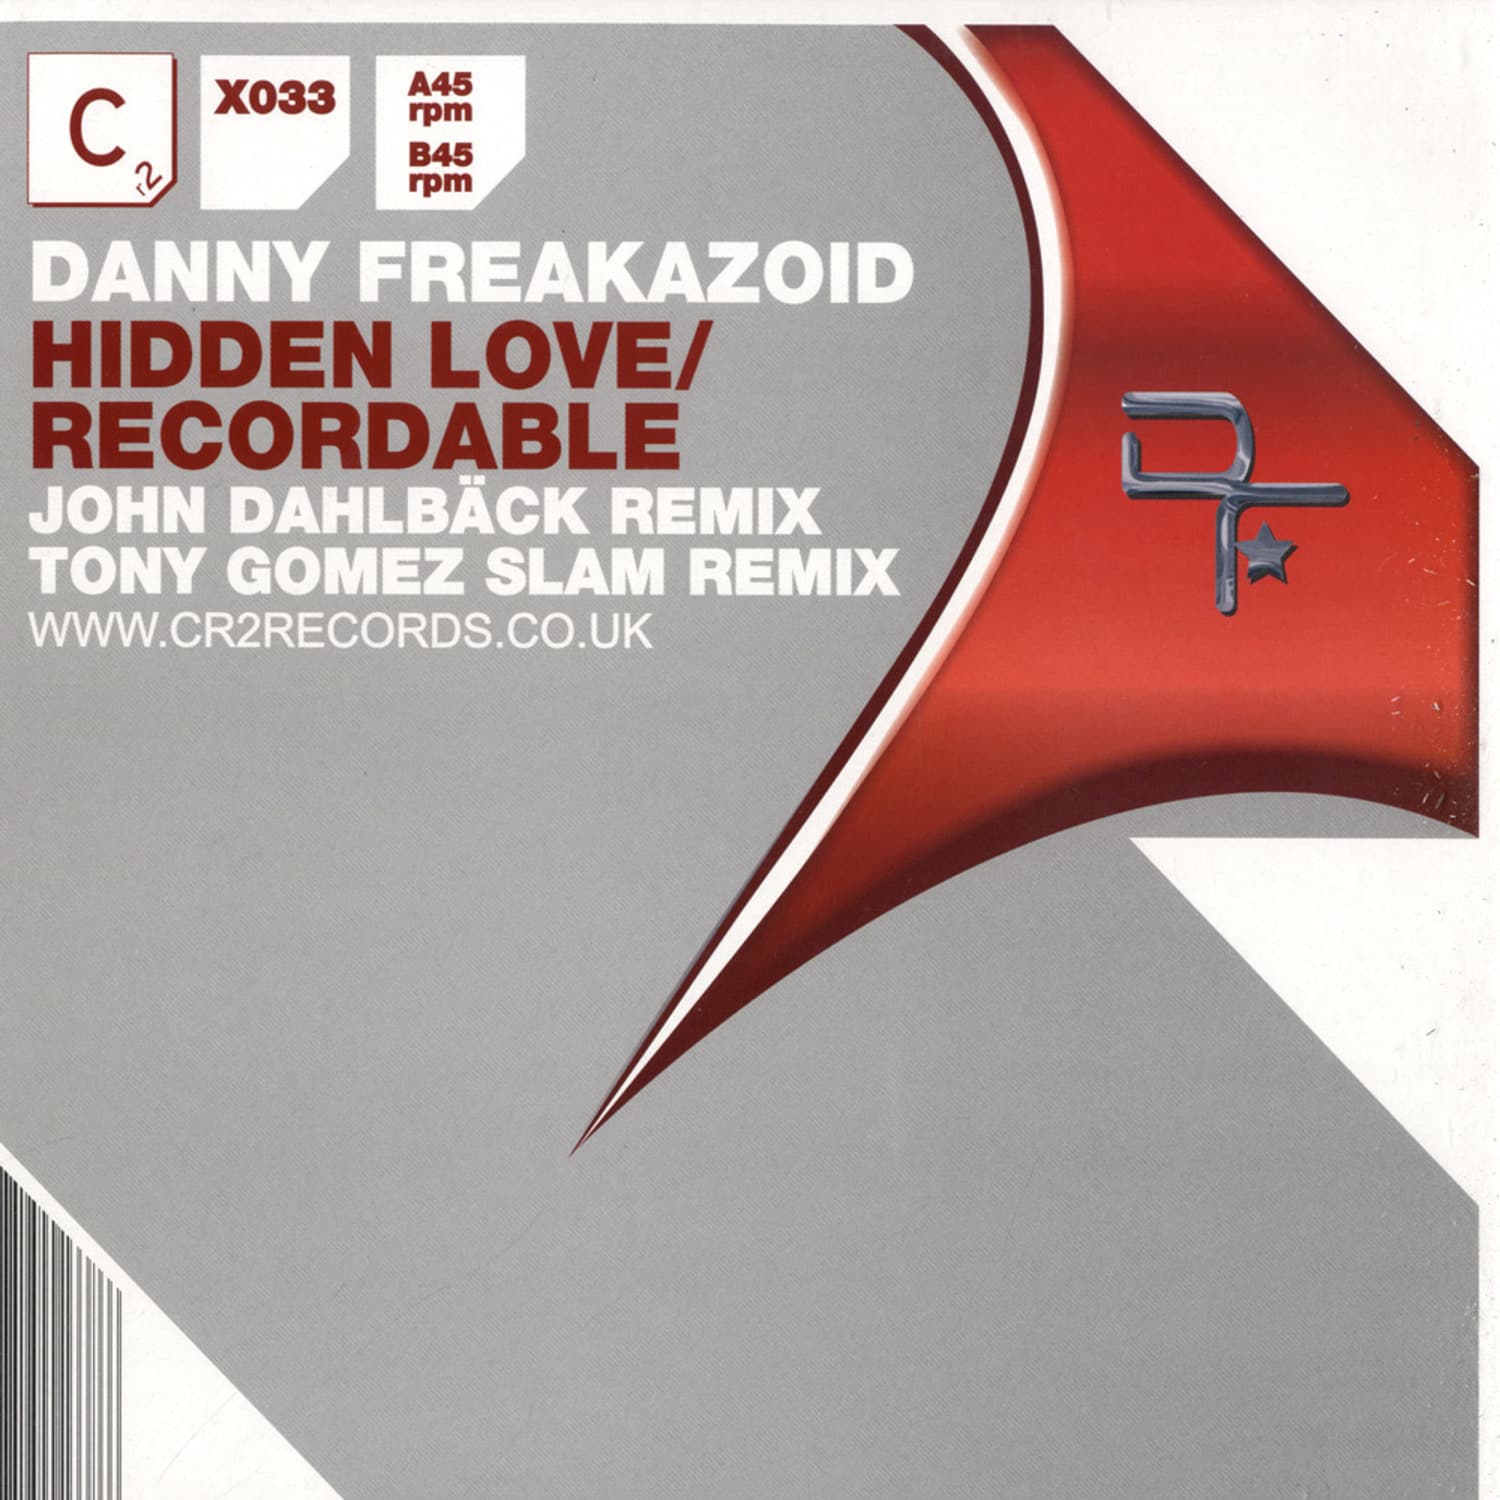 Danny Freakazoid - HIDDEN LOVE / RECORDABLE JOHN DAHBAECK REMIX